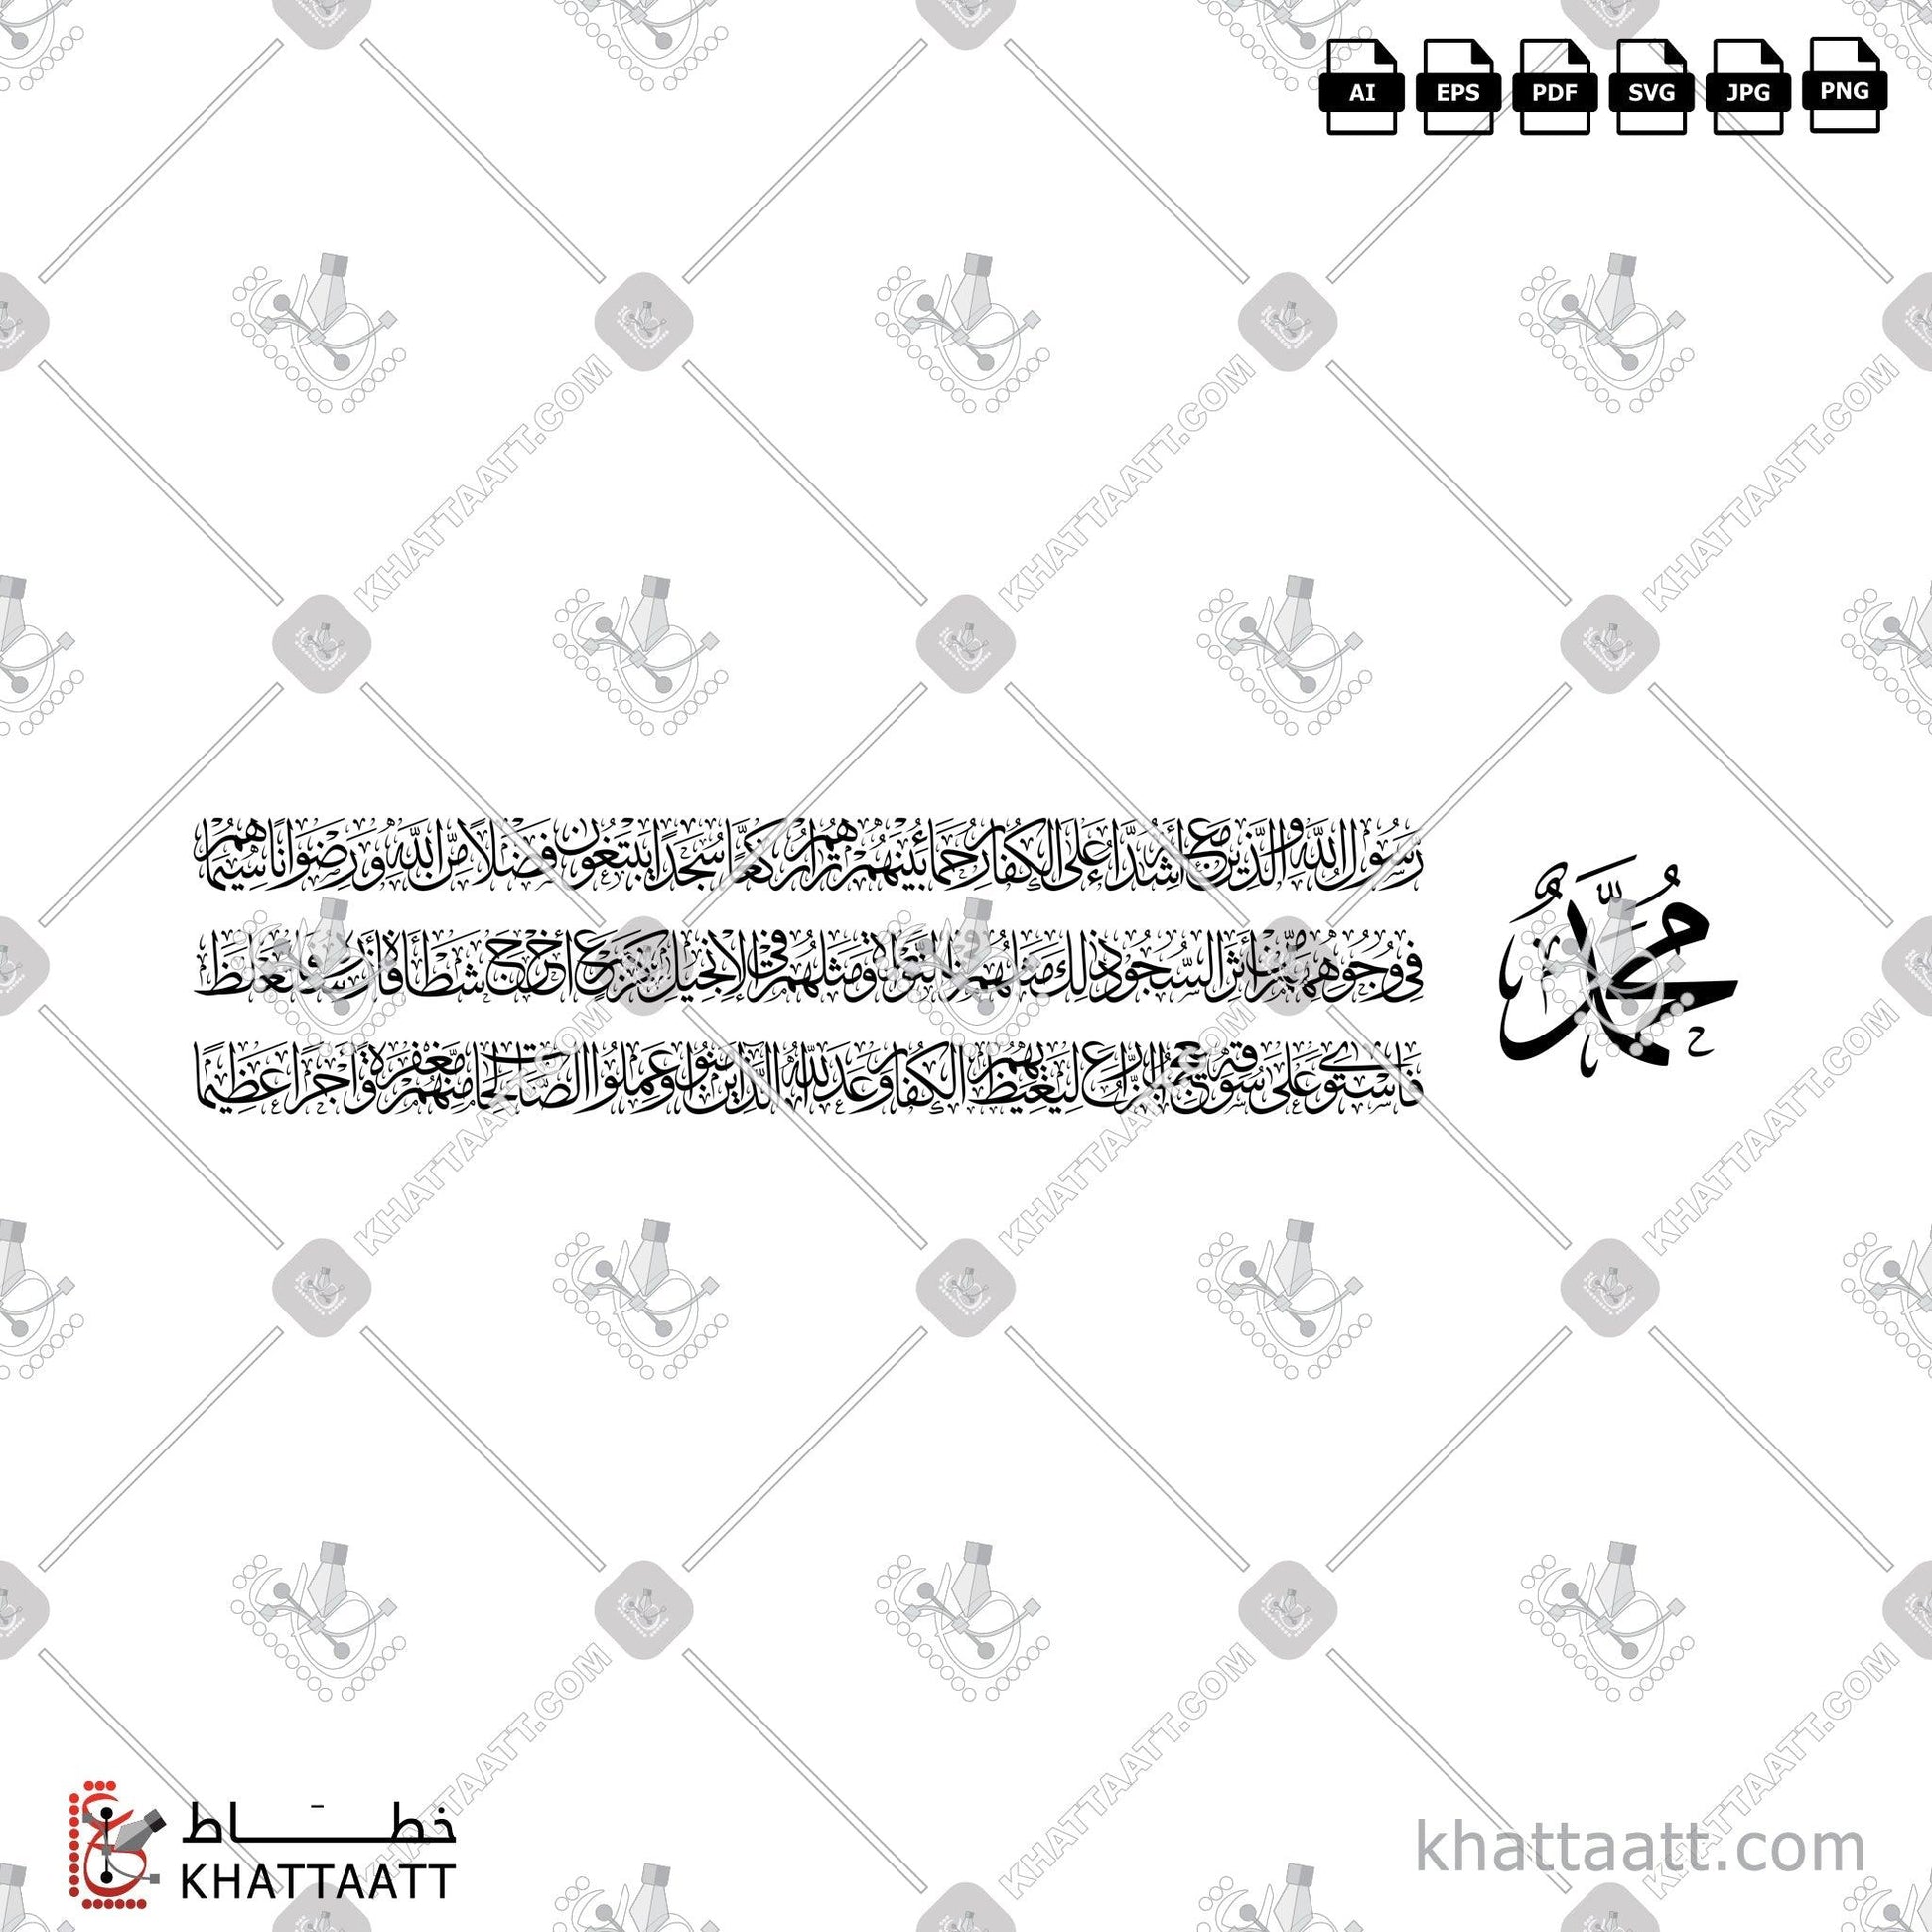 Download Arabic Calligraphy of محمد رسول الله والذين معه أشداء على الكفار رحماء بينهم in Thuluth - خط الثلث in vector and .png